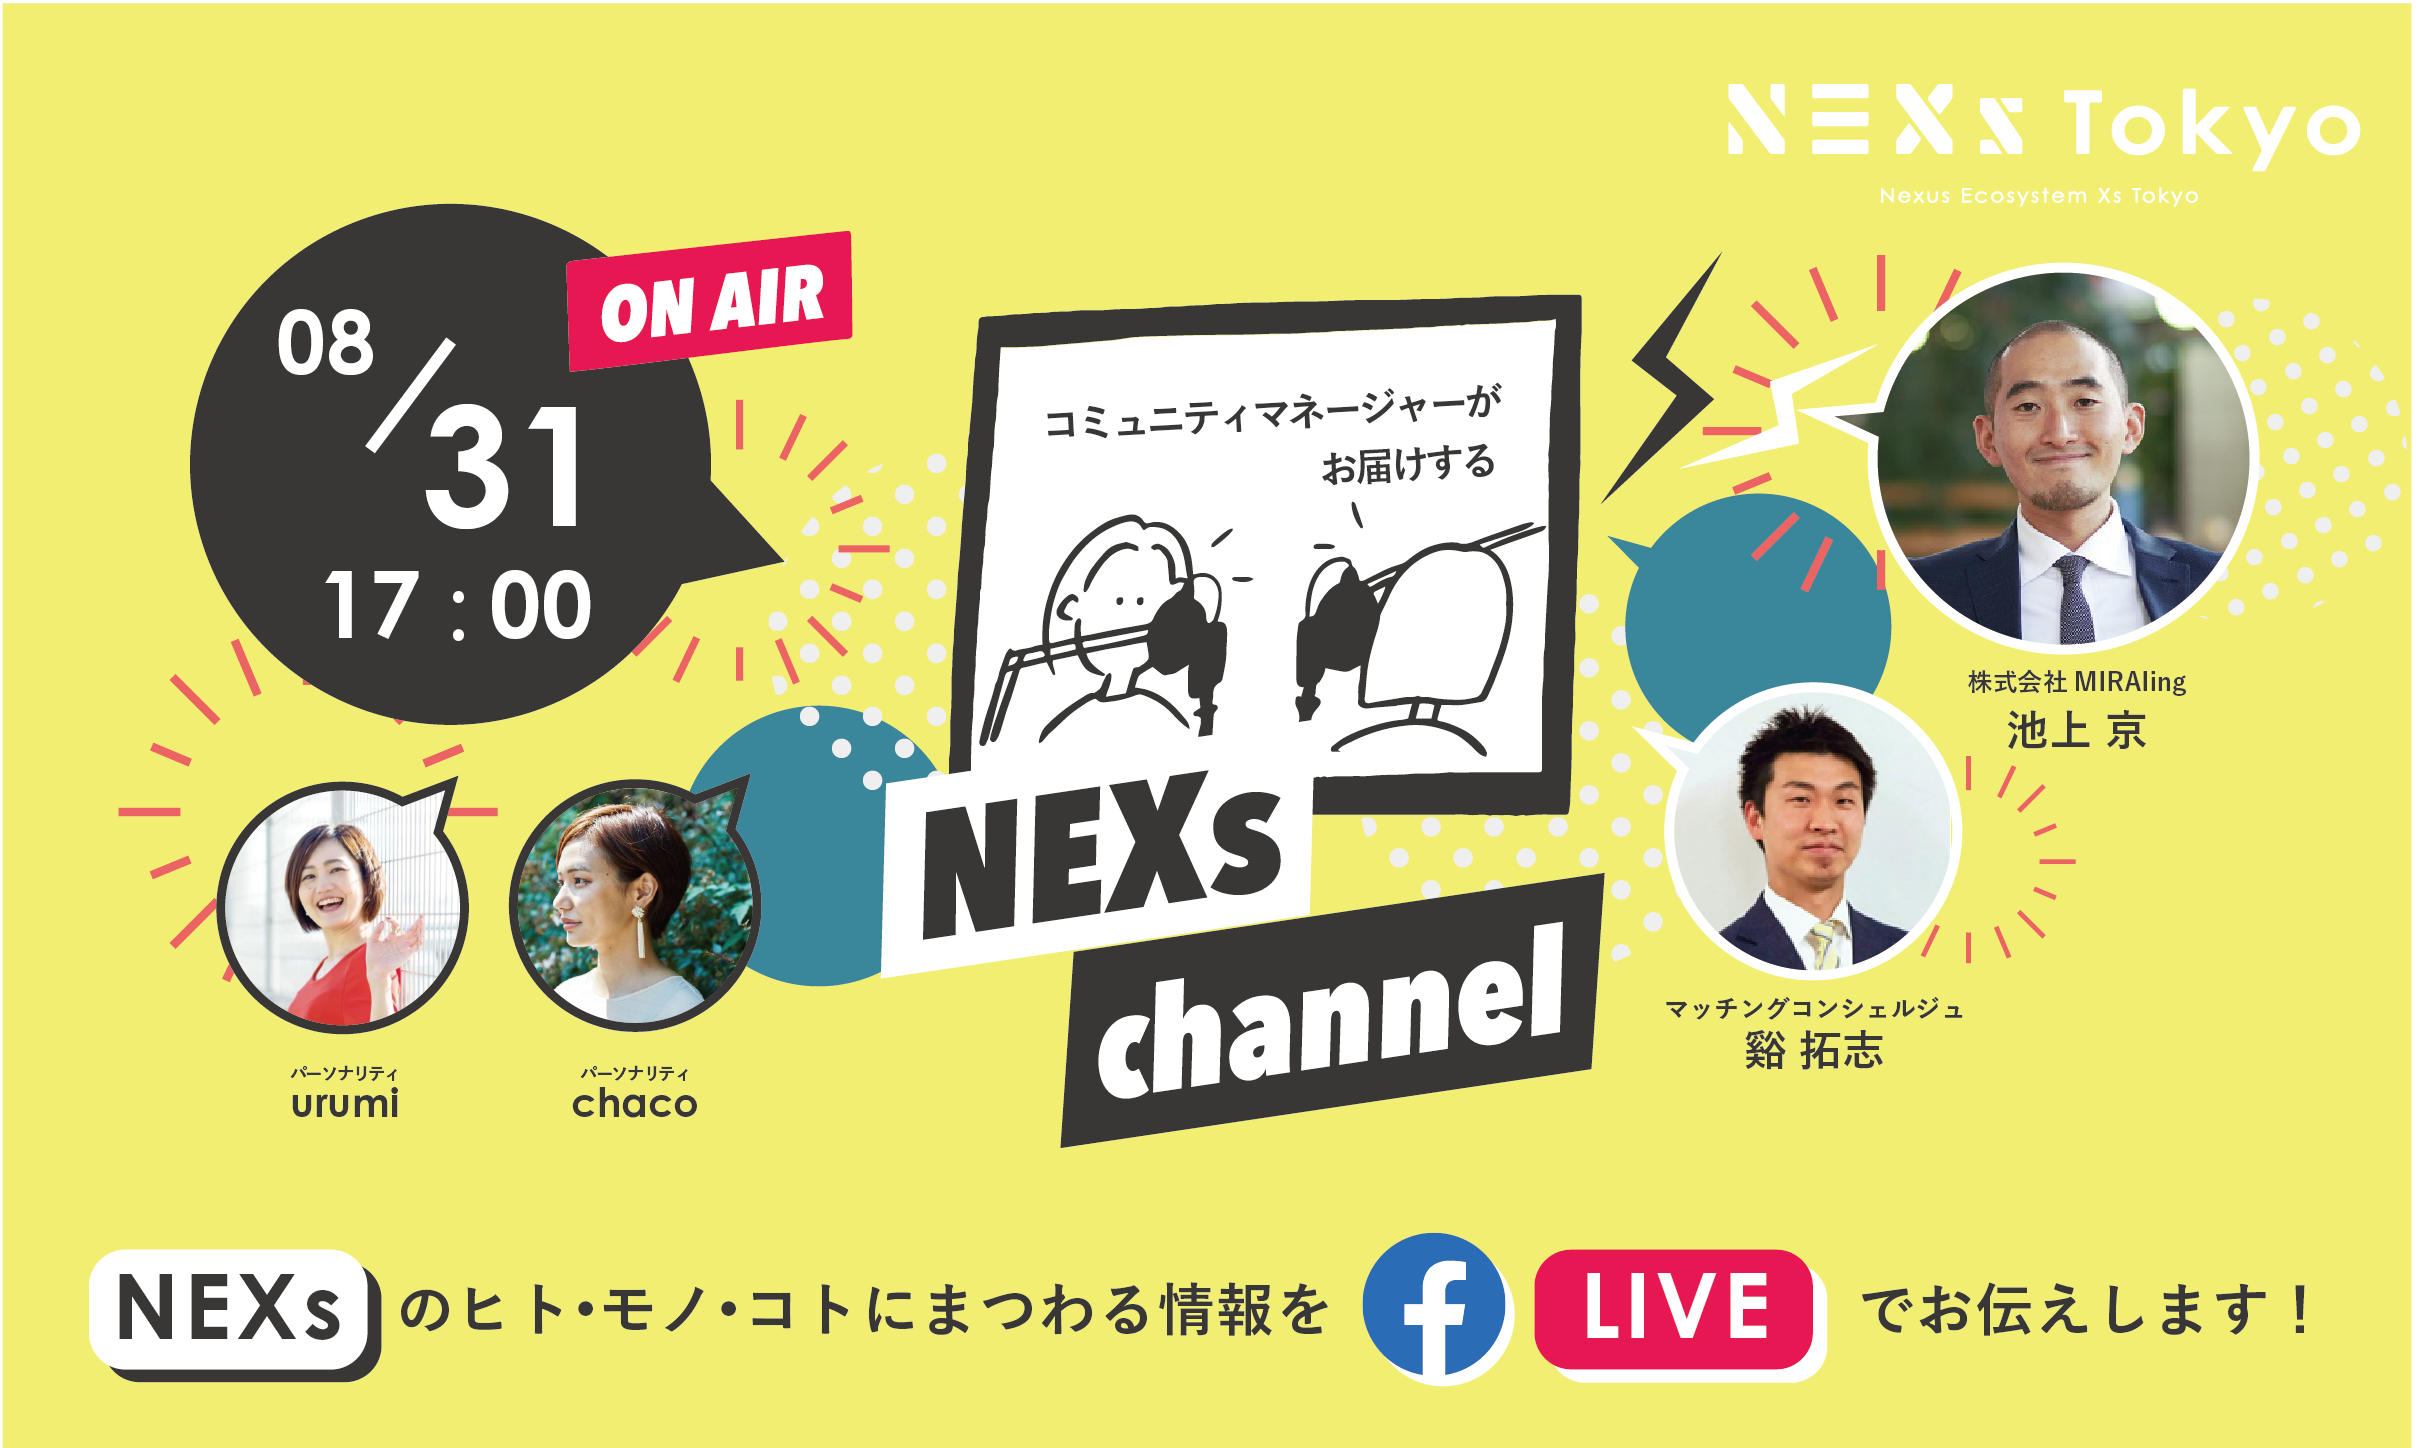 NEXs channel #20 -NEXs Tokyoのヒト・モノ・コトを特設ラジオブースから生放送でお届け！-